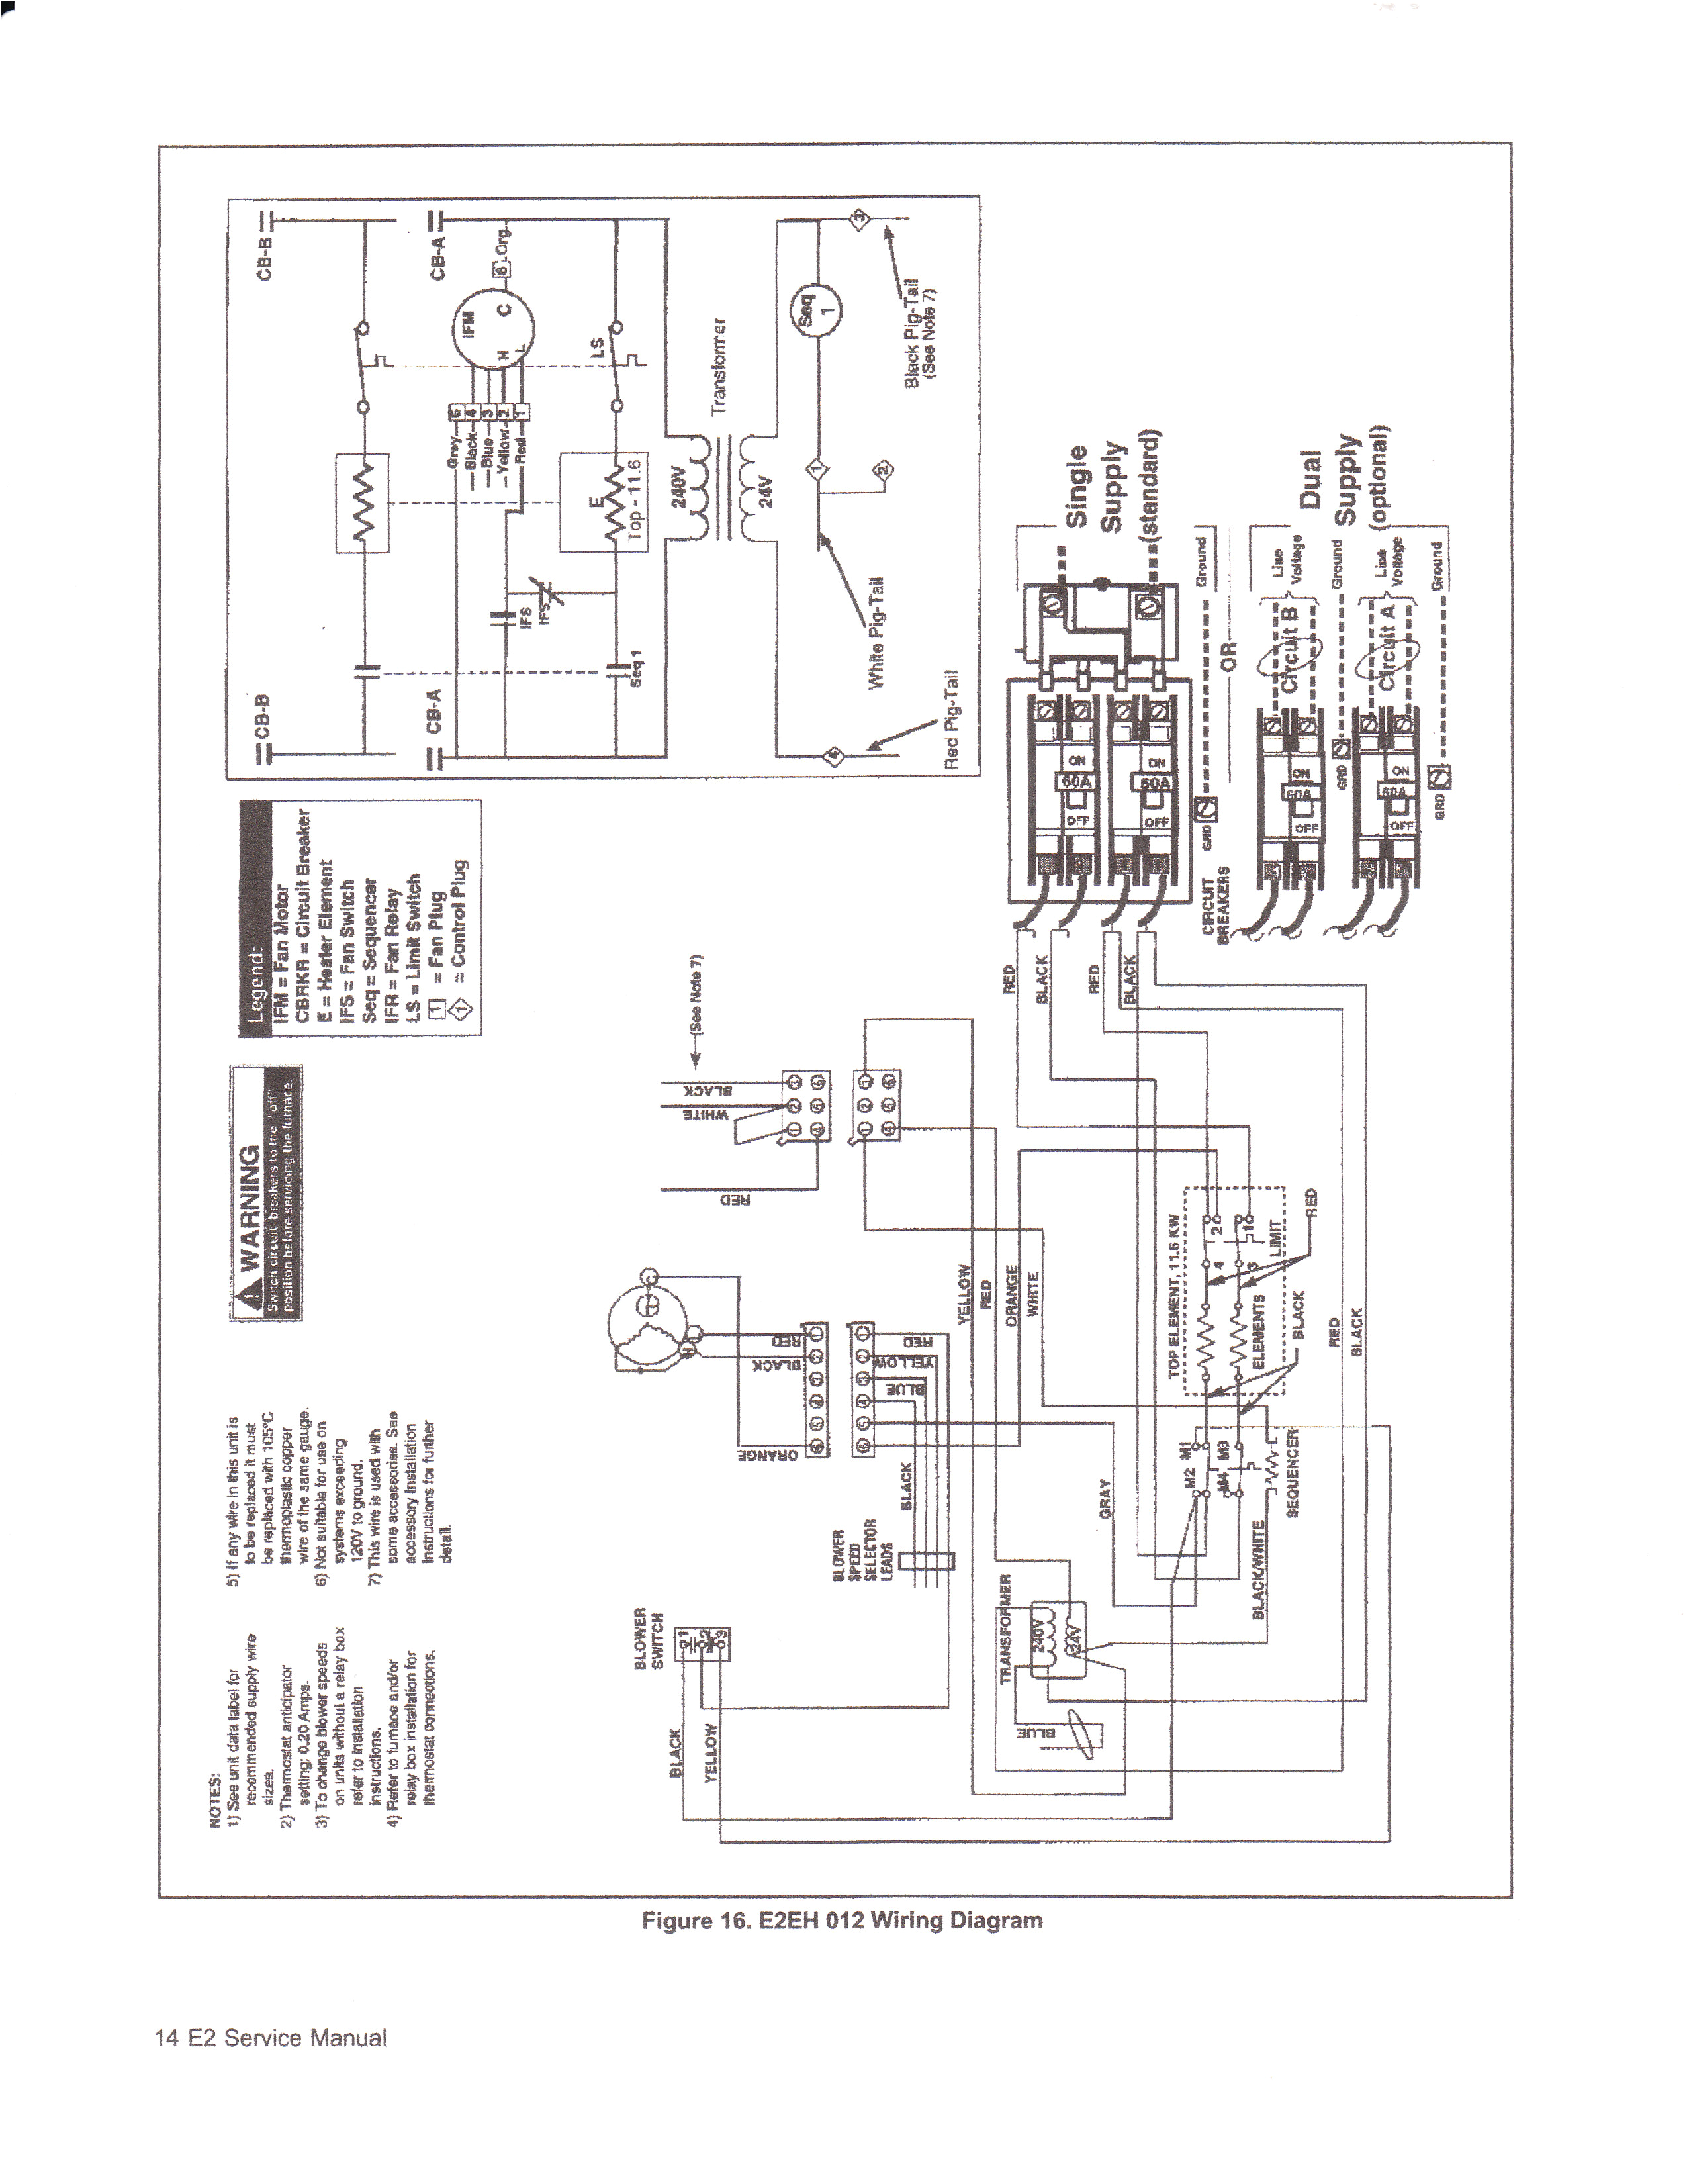 climatrol furnace wiring diagram wiring diagram autovehicle climatrol furnace wiring diagram climatrol furnace wiring diagram